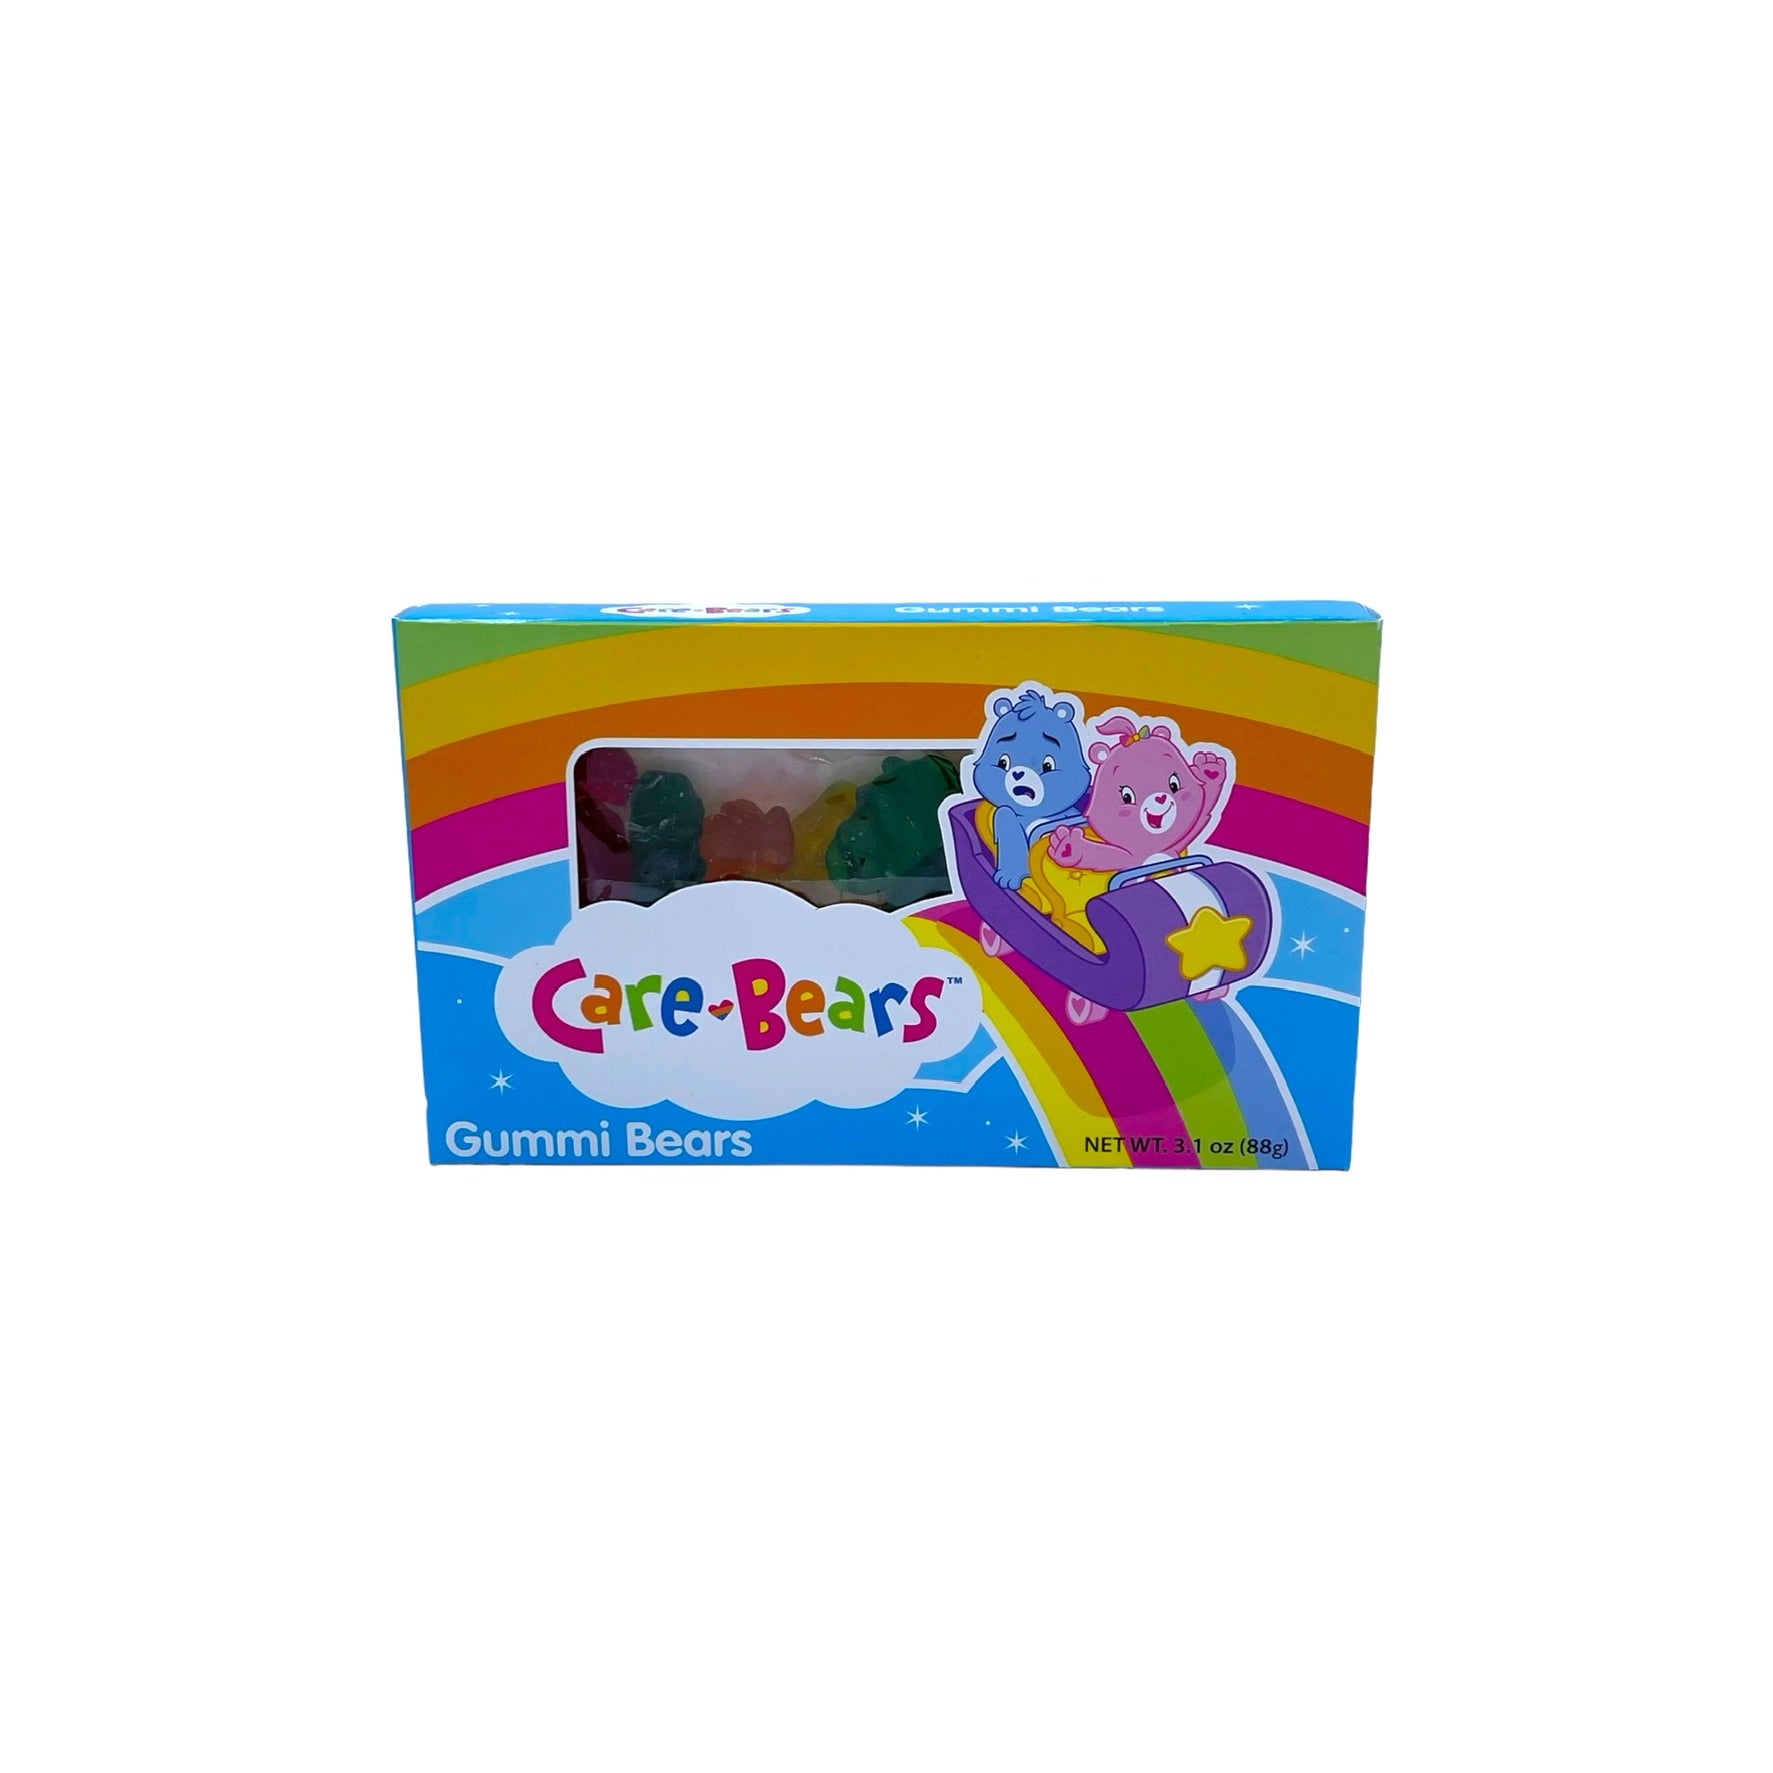 Care Bears Gummies